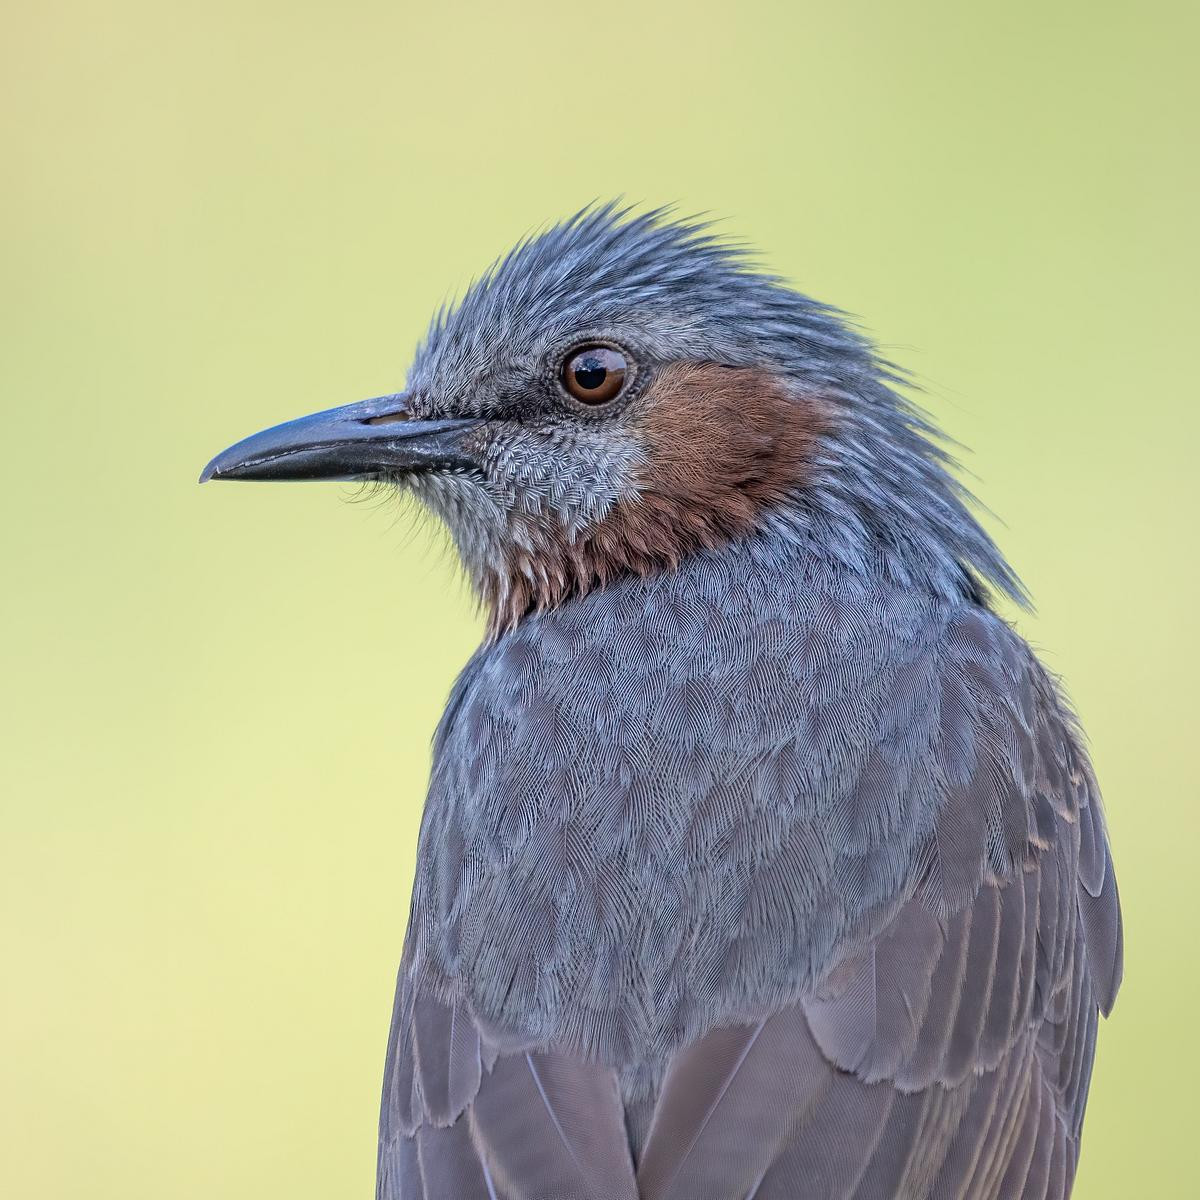 Bird and wildlife photography with the Panasonic Leica 100-400